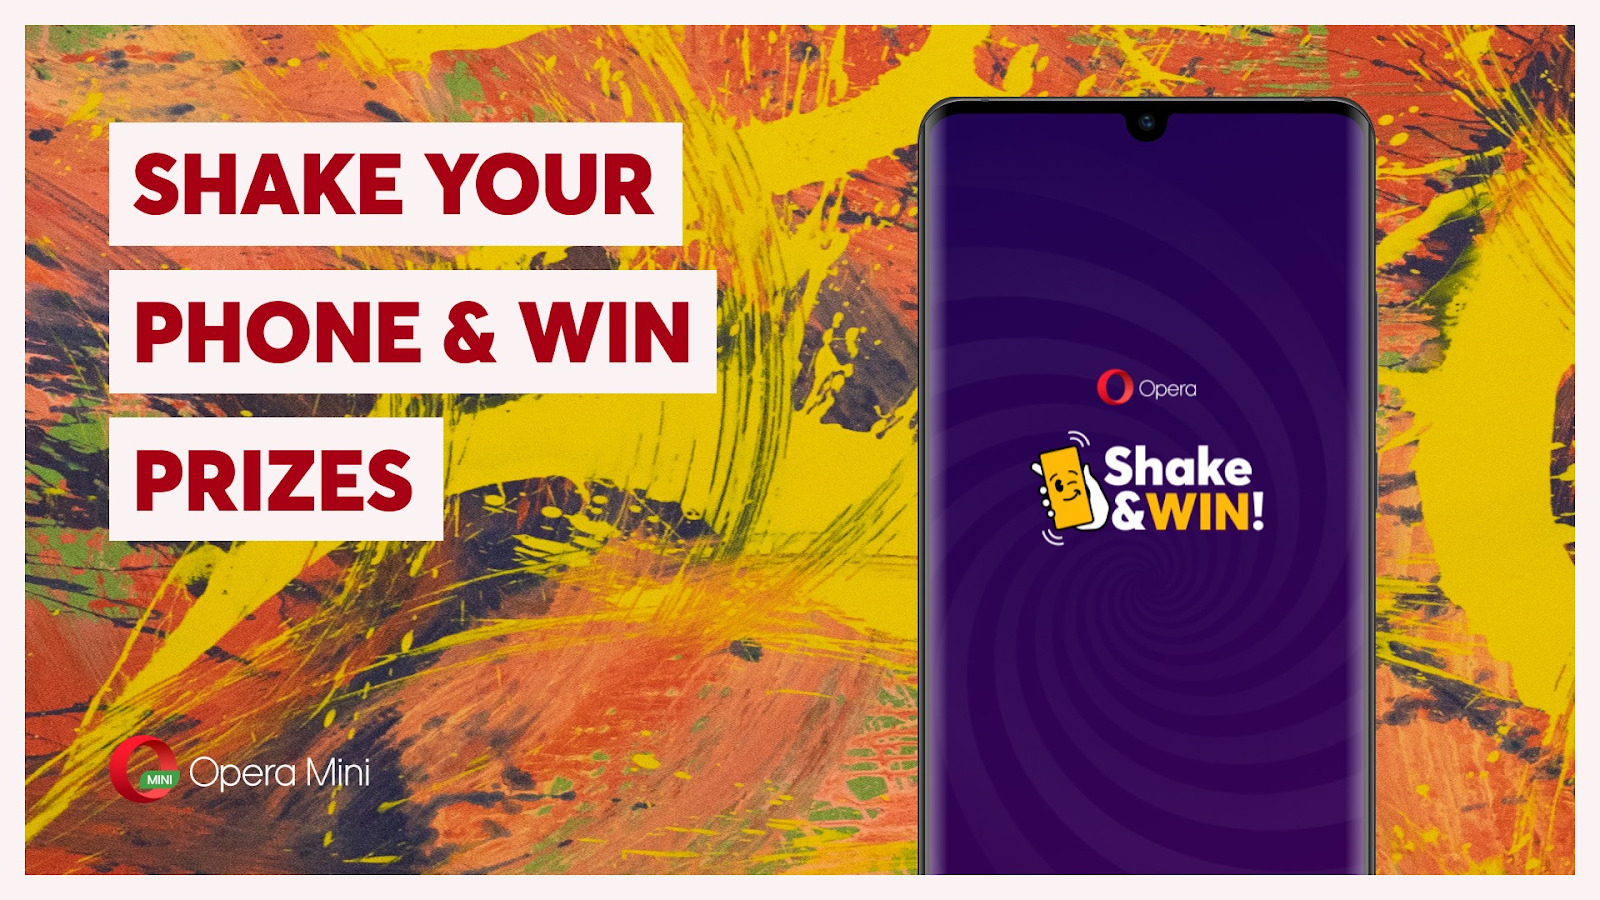 Opera announces a new Shake and Win campaign.